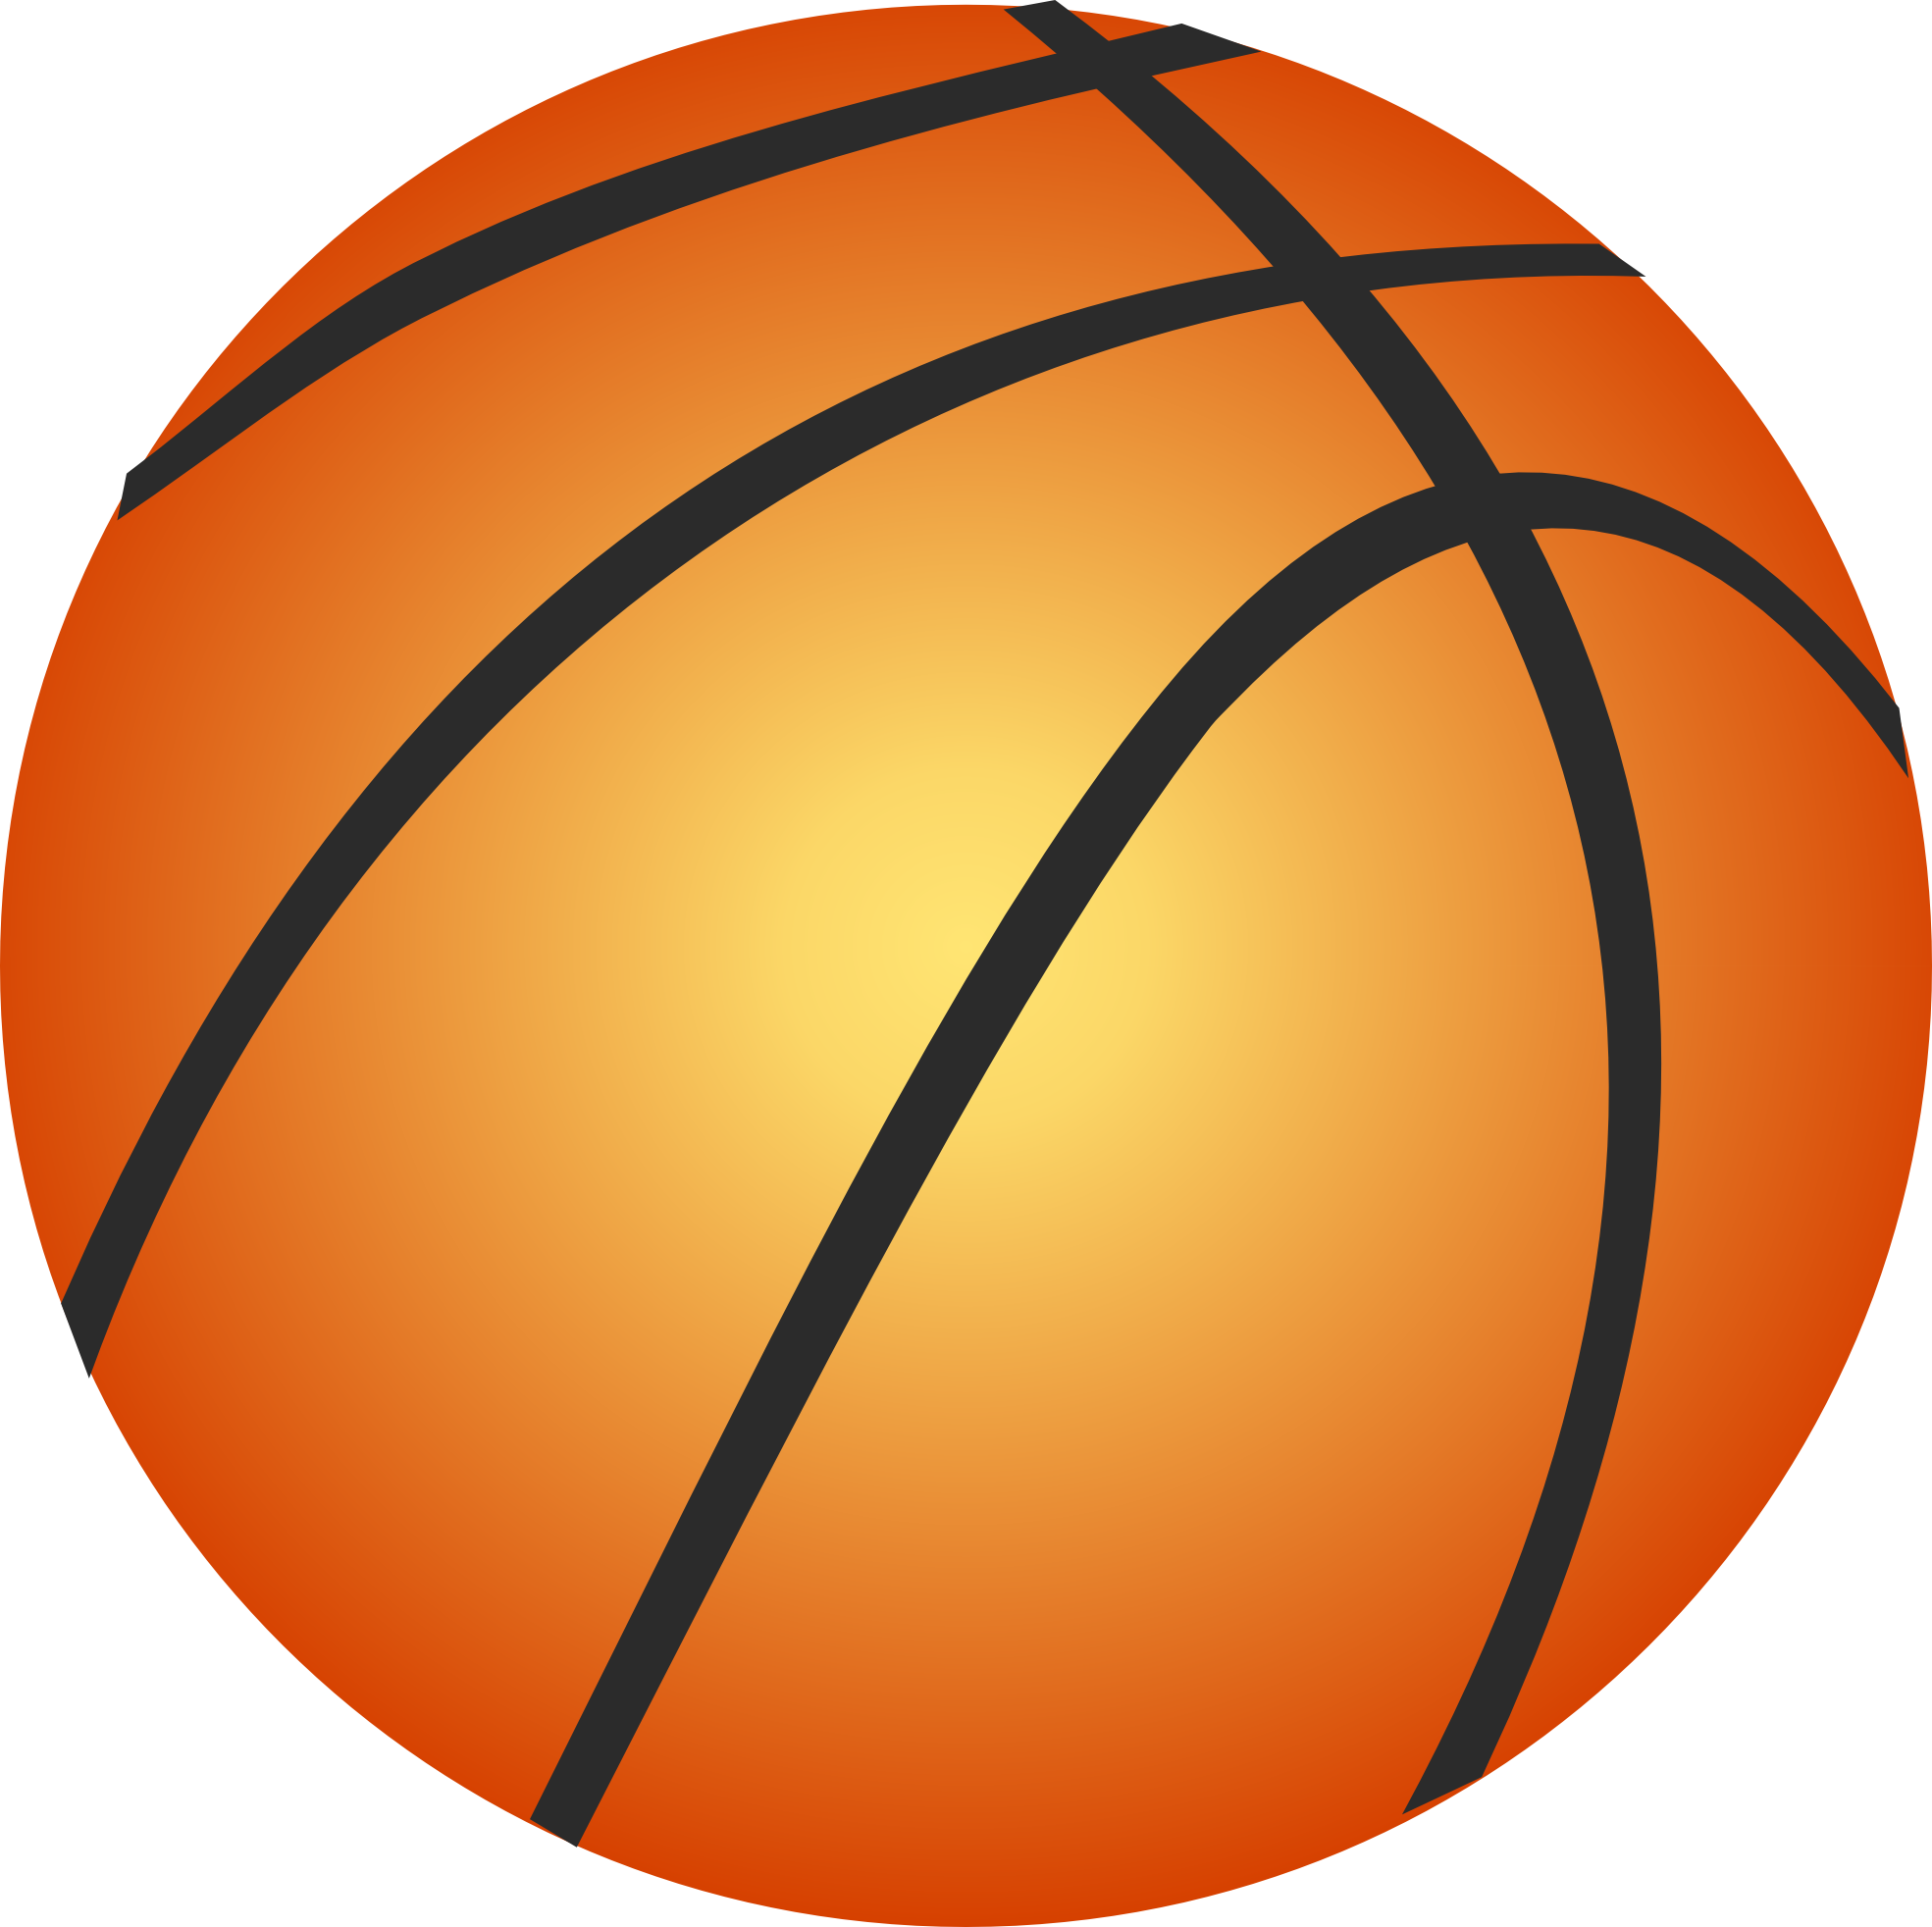 basketball clipart